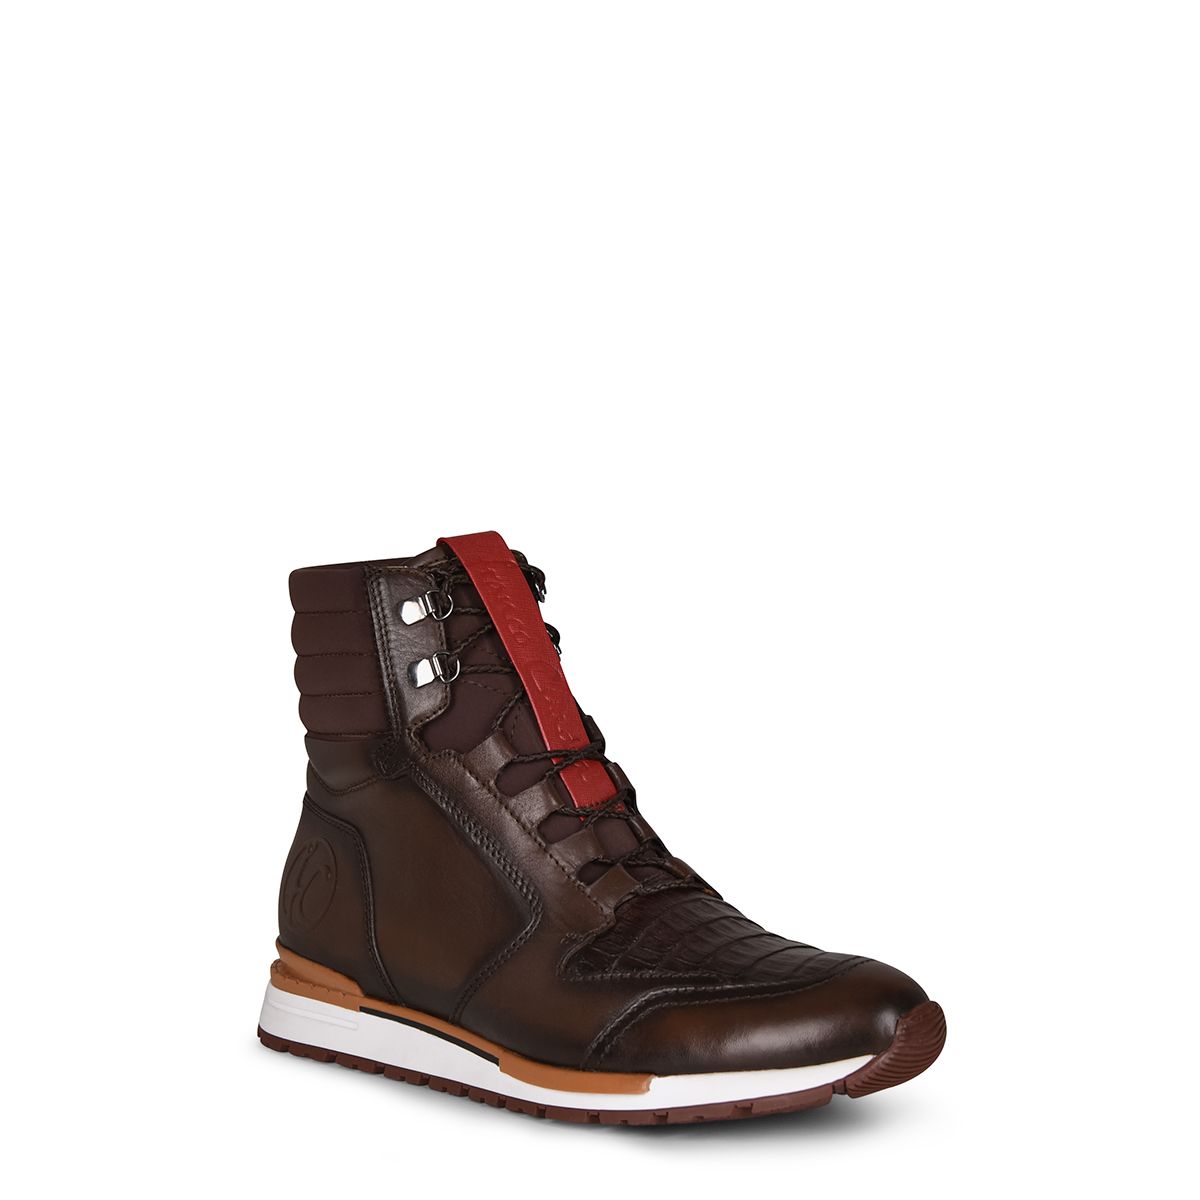 N48CWTS - Cuadra brown casual fashion caiman leather sneaker boots for men-FRANCO CUADRA-Kuet-Cuadra-Boots